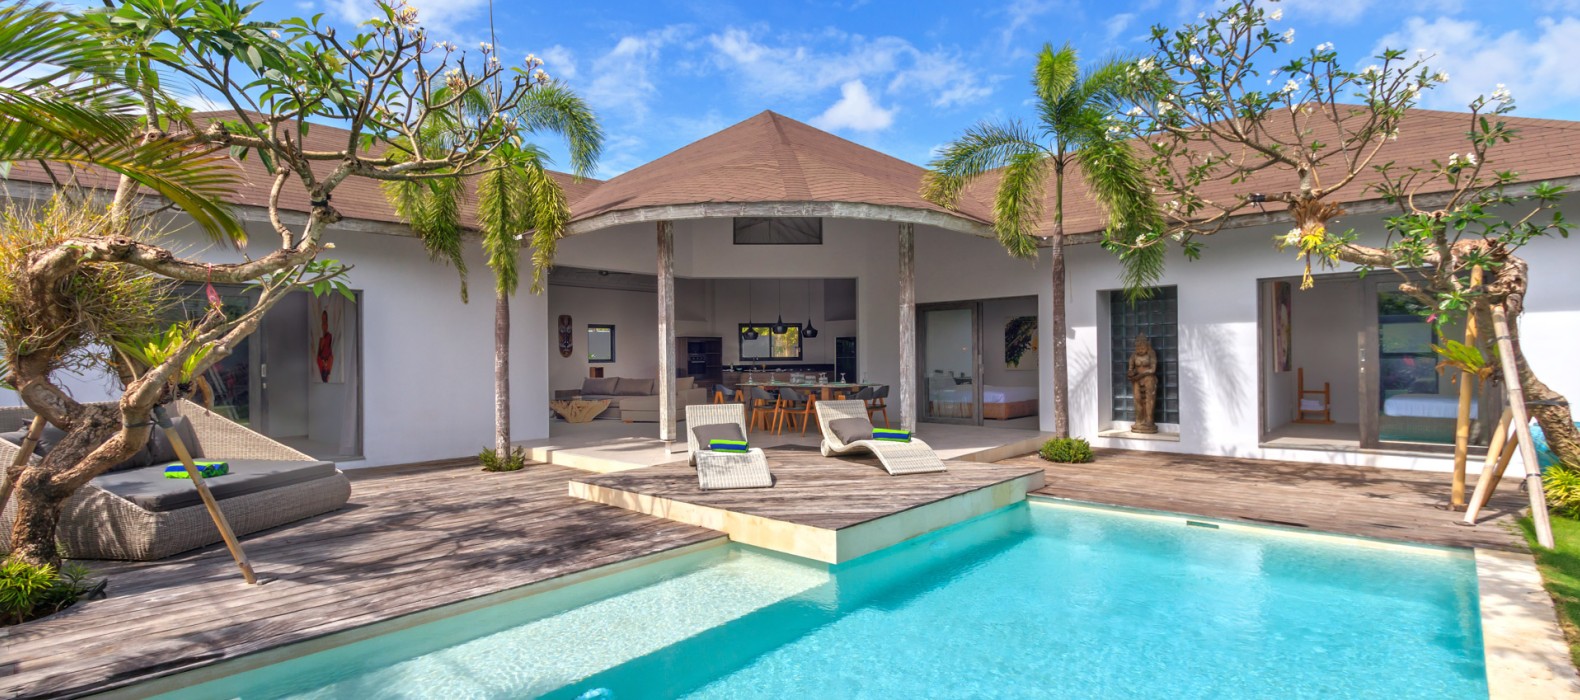 Exterior pool area view of Villa Ohana in Bali